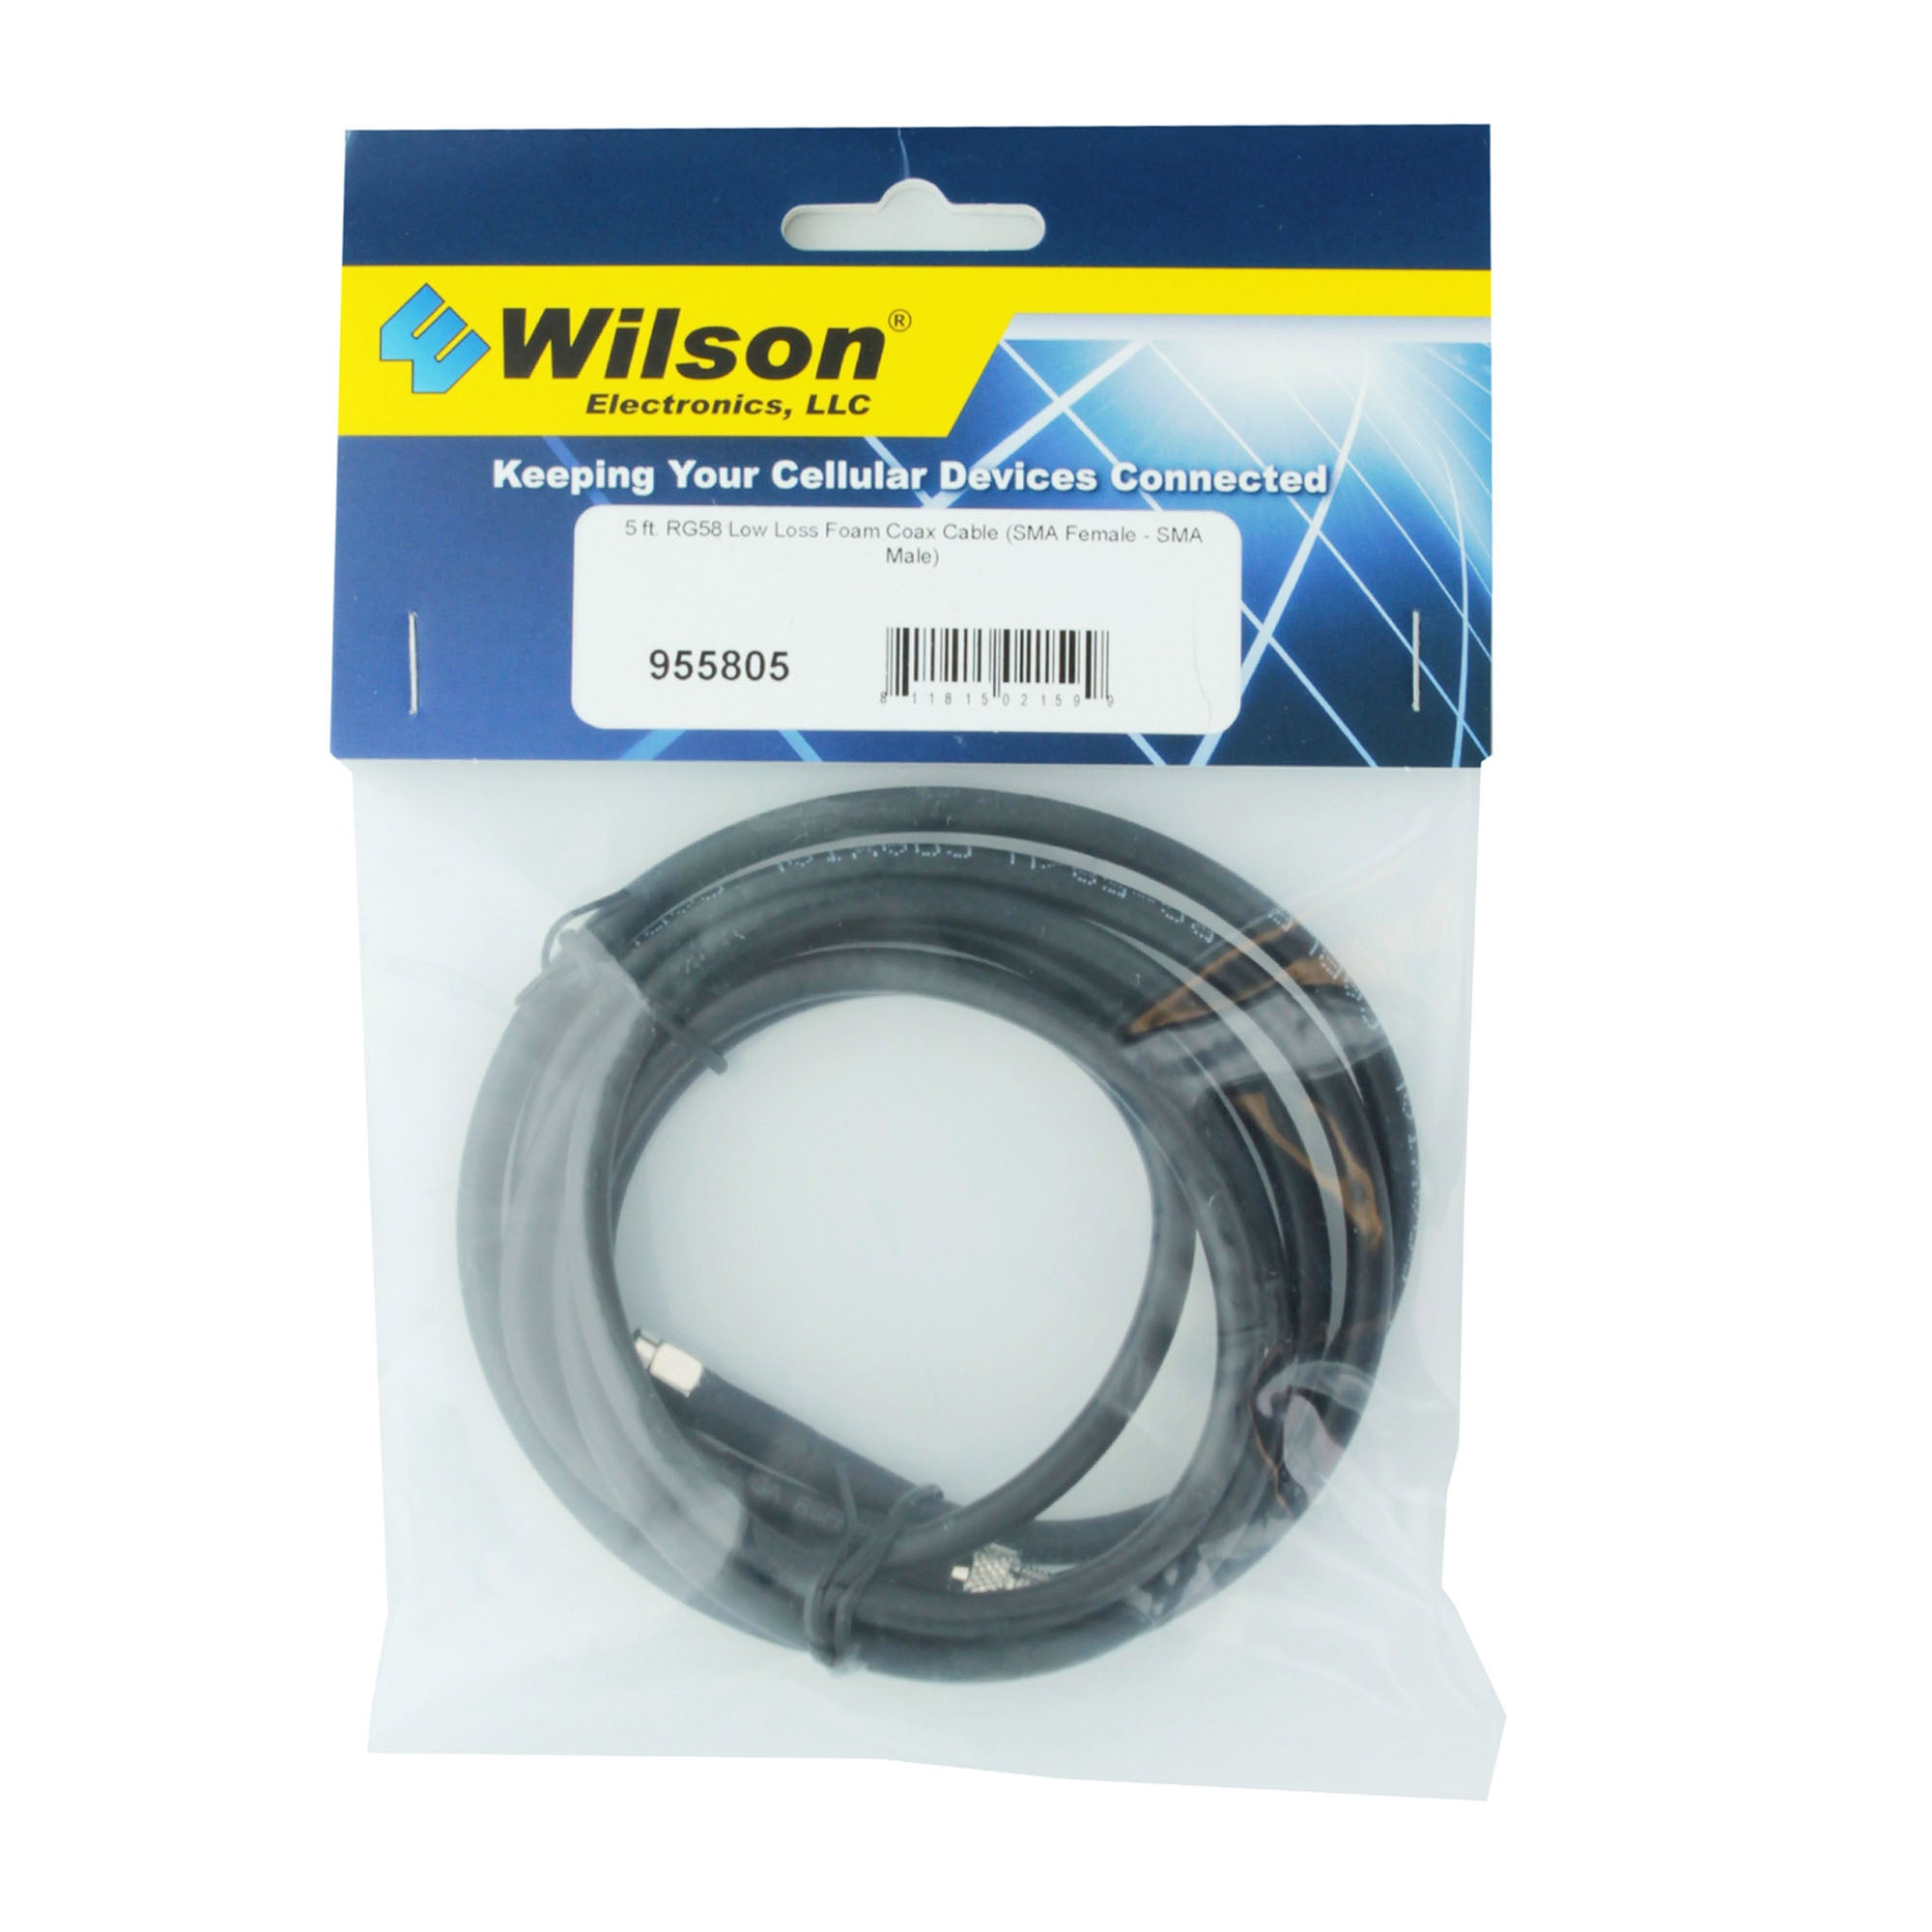 Wilson Electronics 5 ft. RG58 Low Loss Foam Coax Cable (SMA Female - SMA Male)